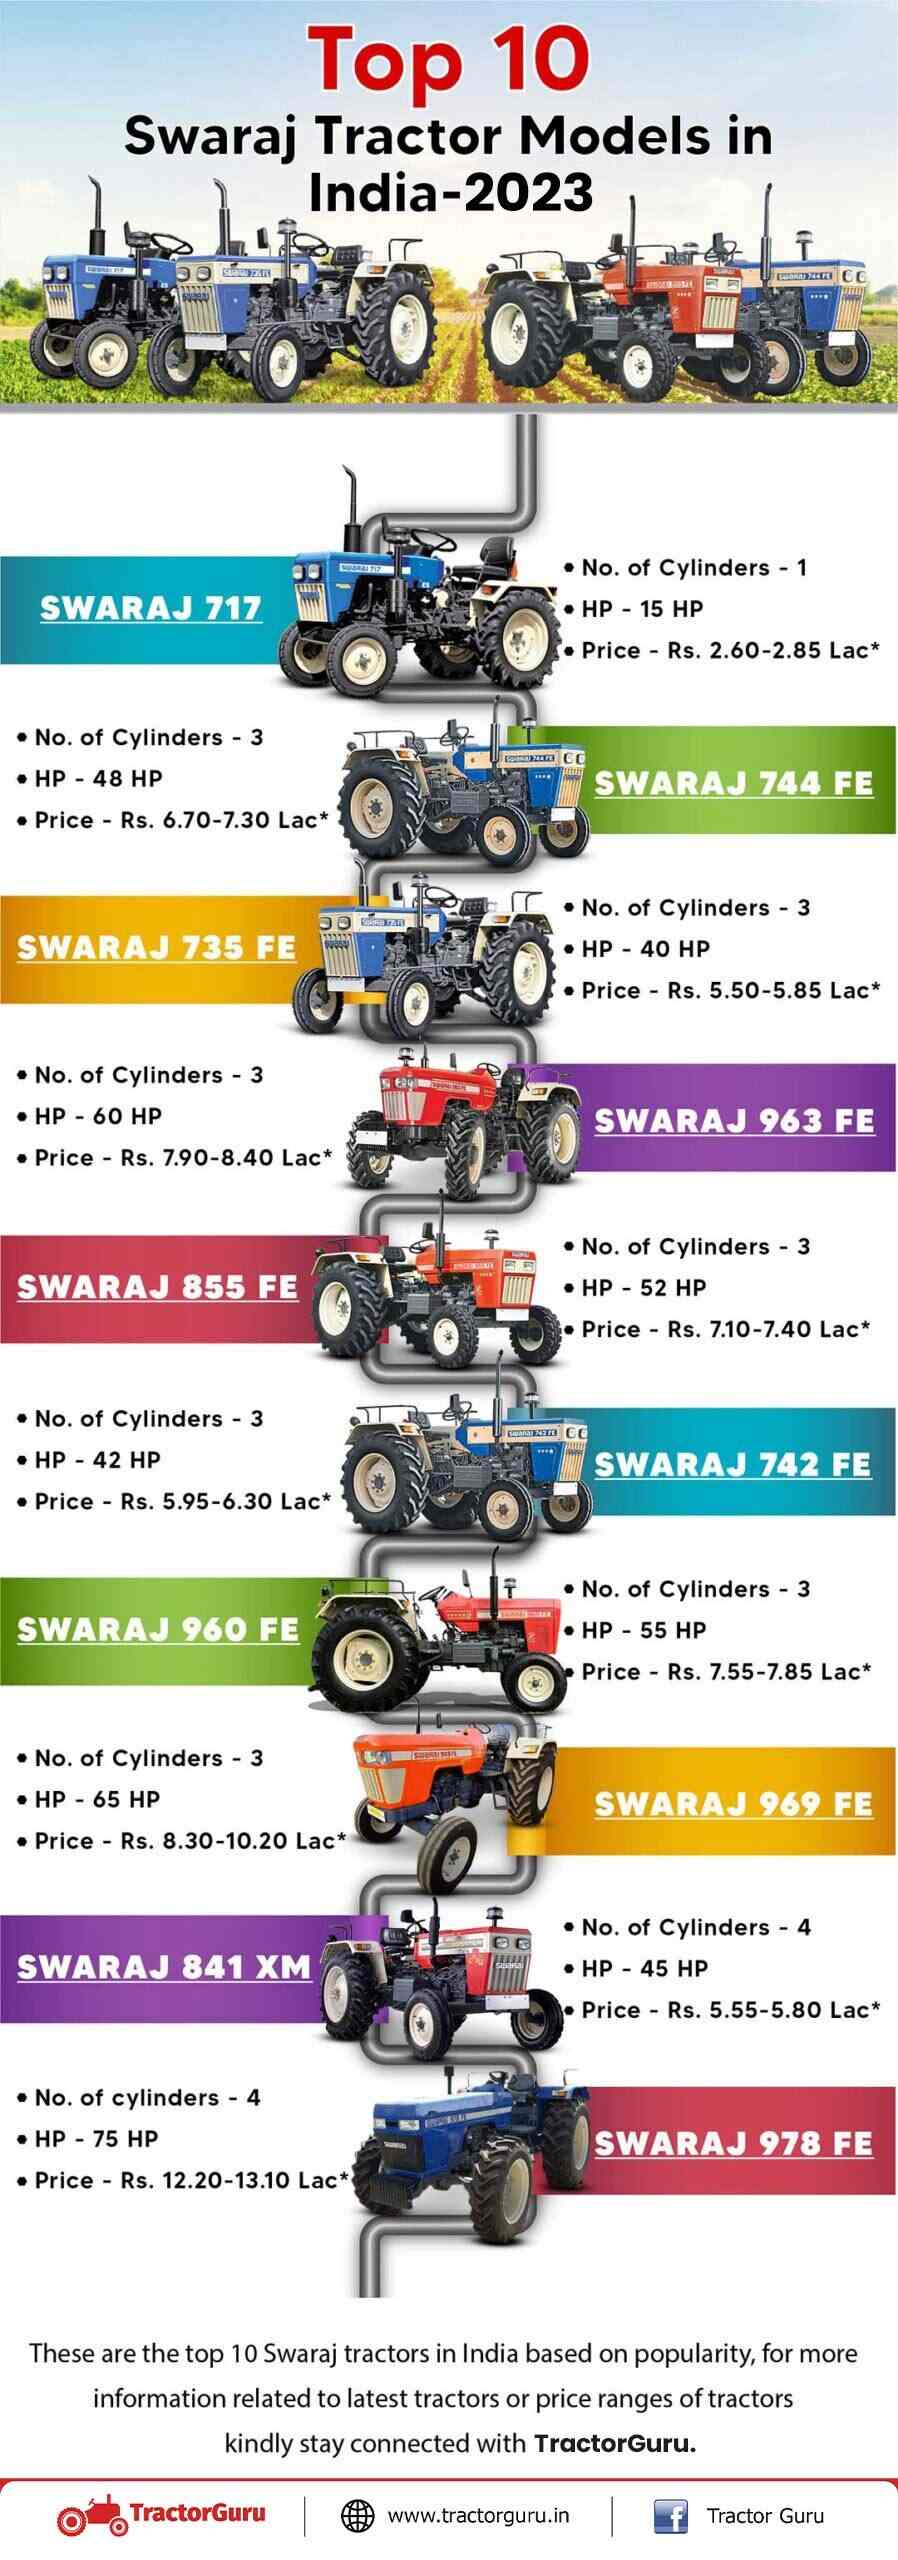 Top 10 Swaraj Tractor Models in India 2023 